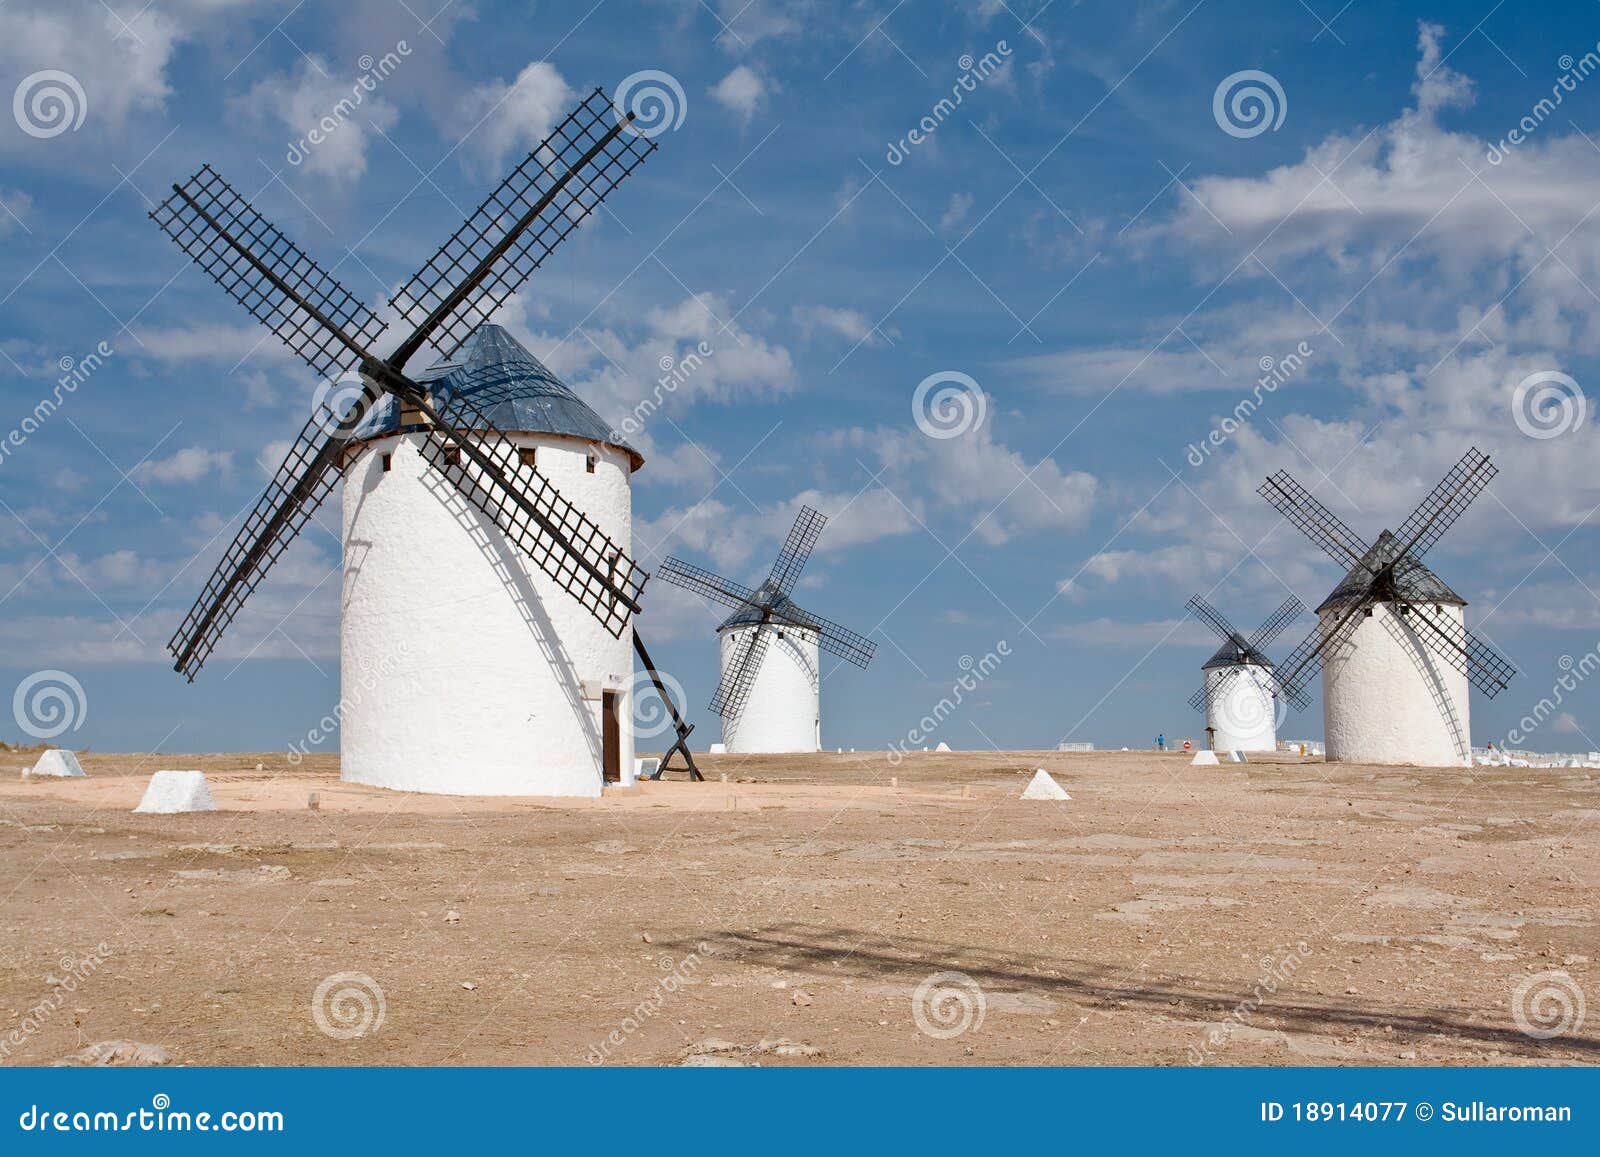 windmills at campo de criptana